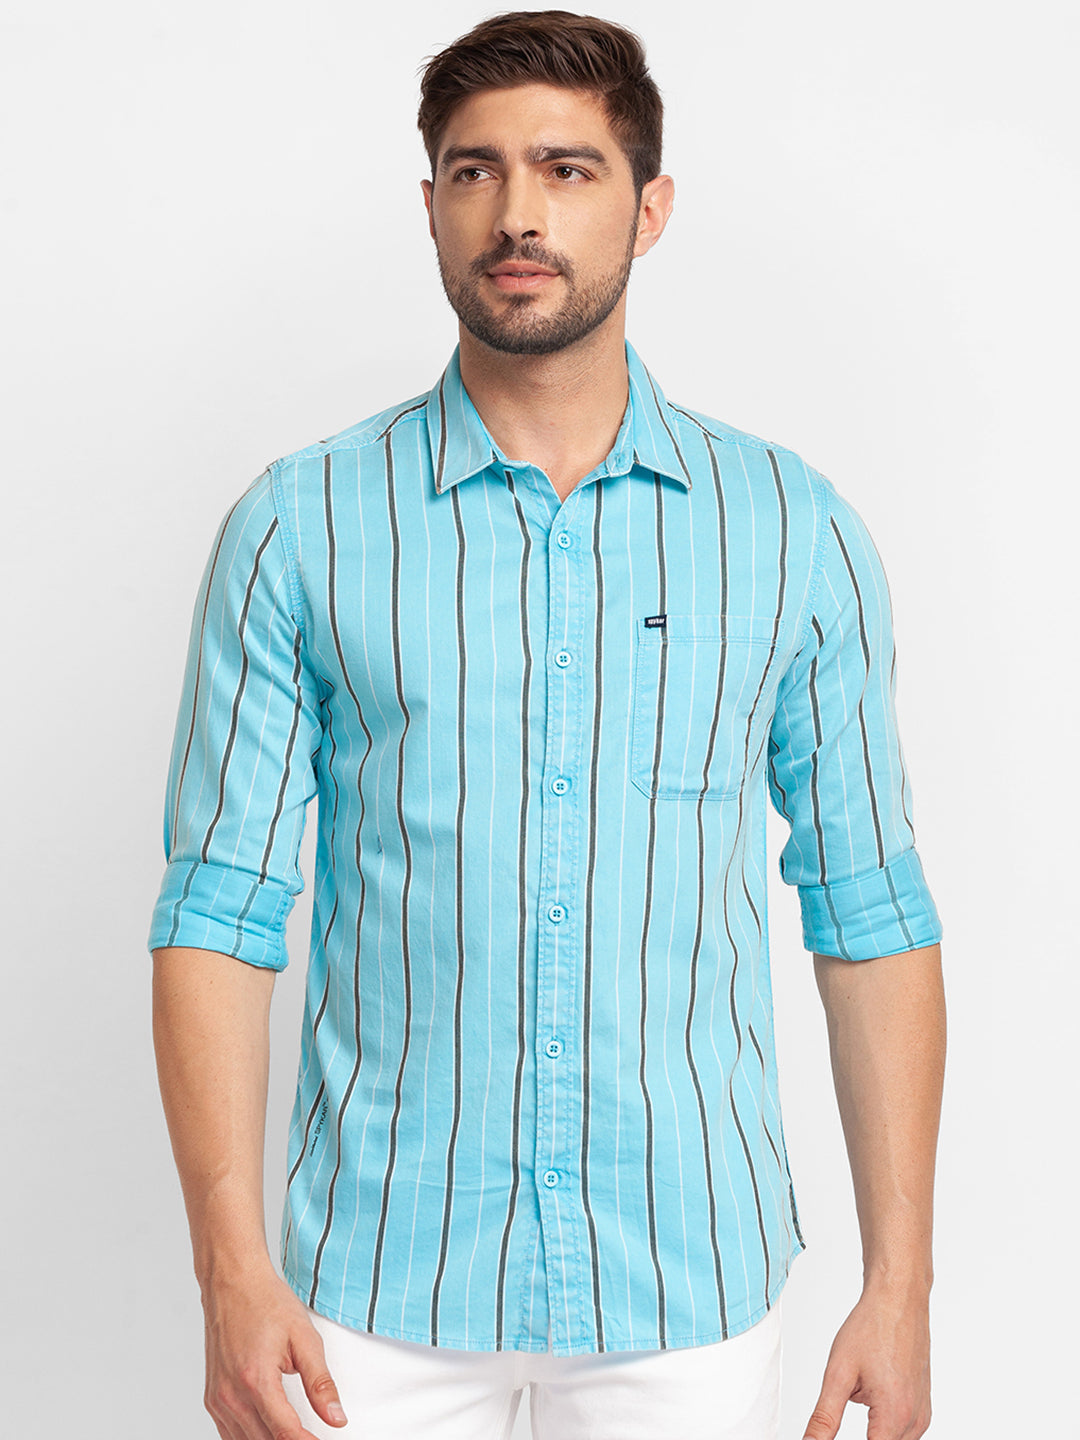 Spykar Aqua Blue Cotton Full Sleeve Stripes Shirt For Men